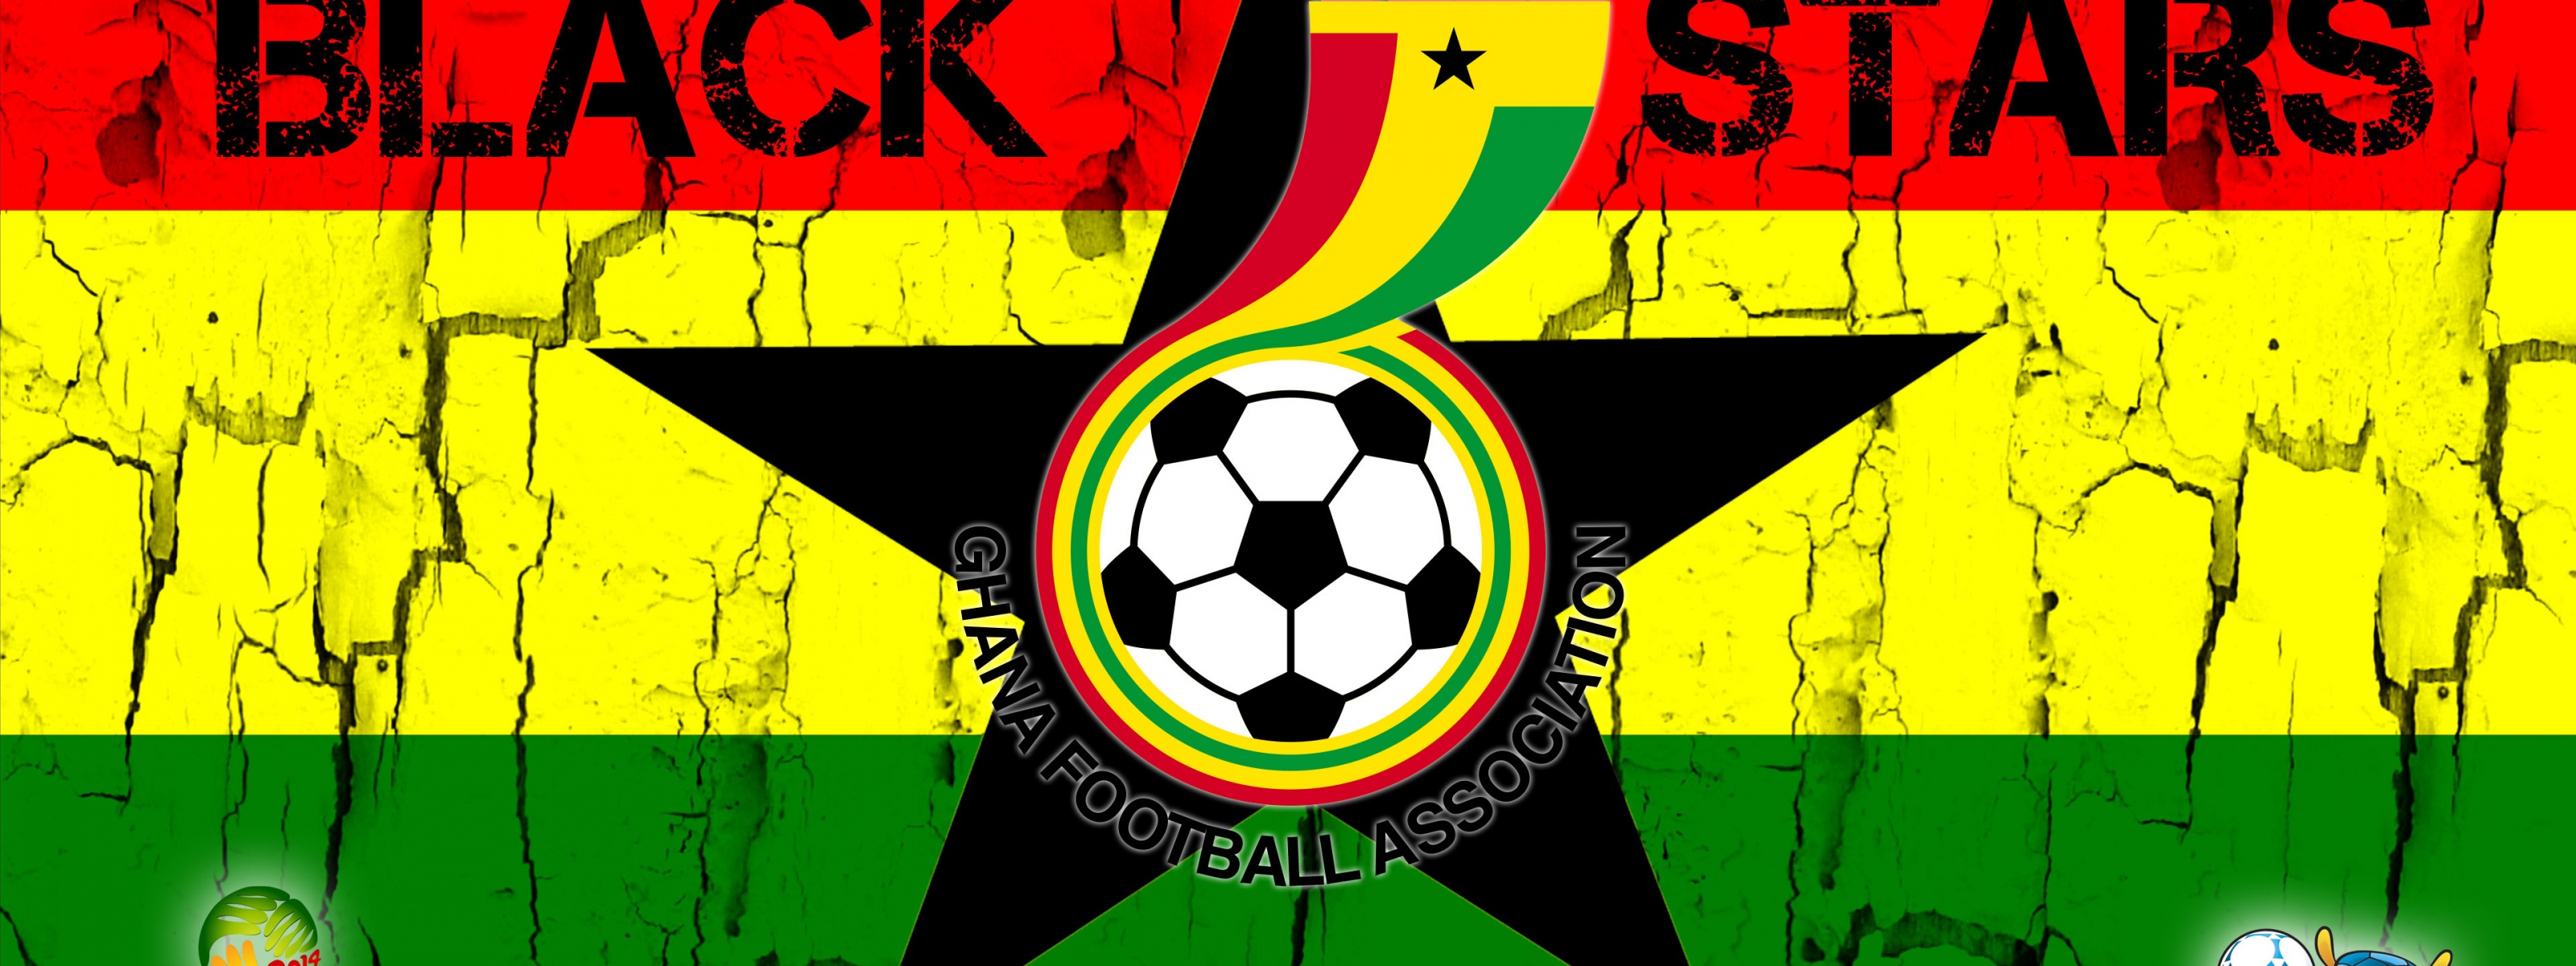 The Black Stars Ghana Football Logo